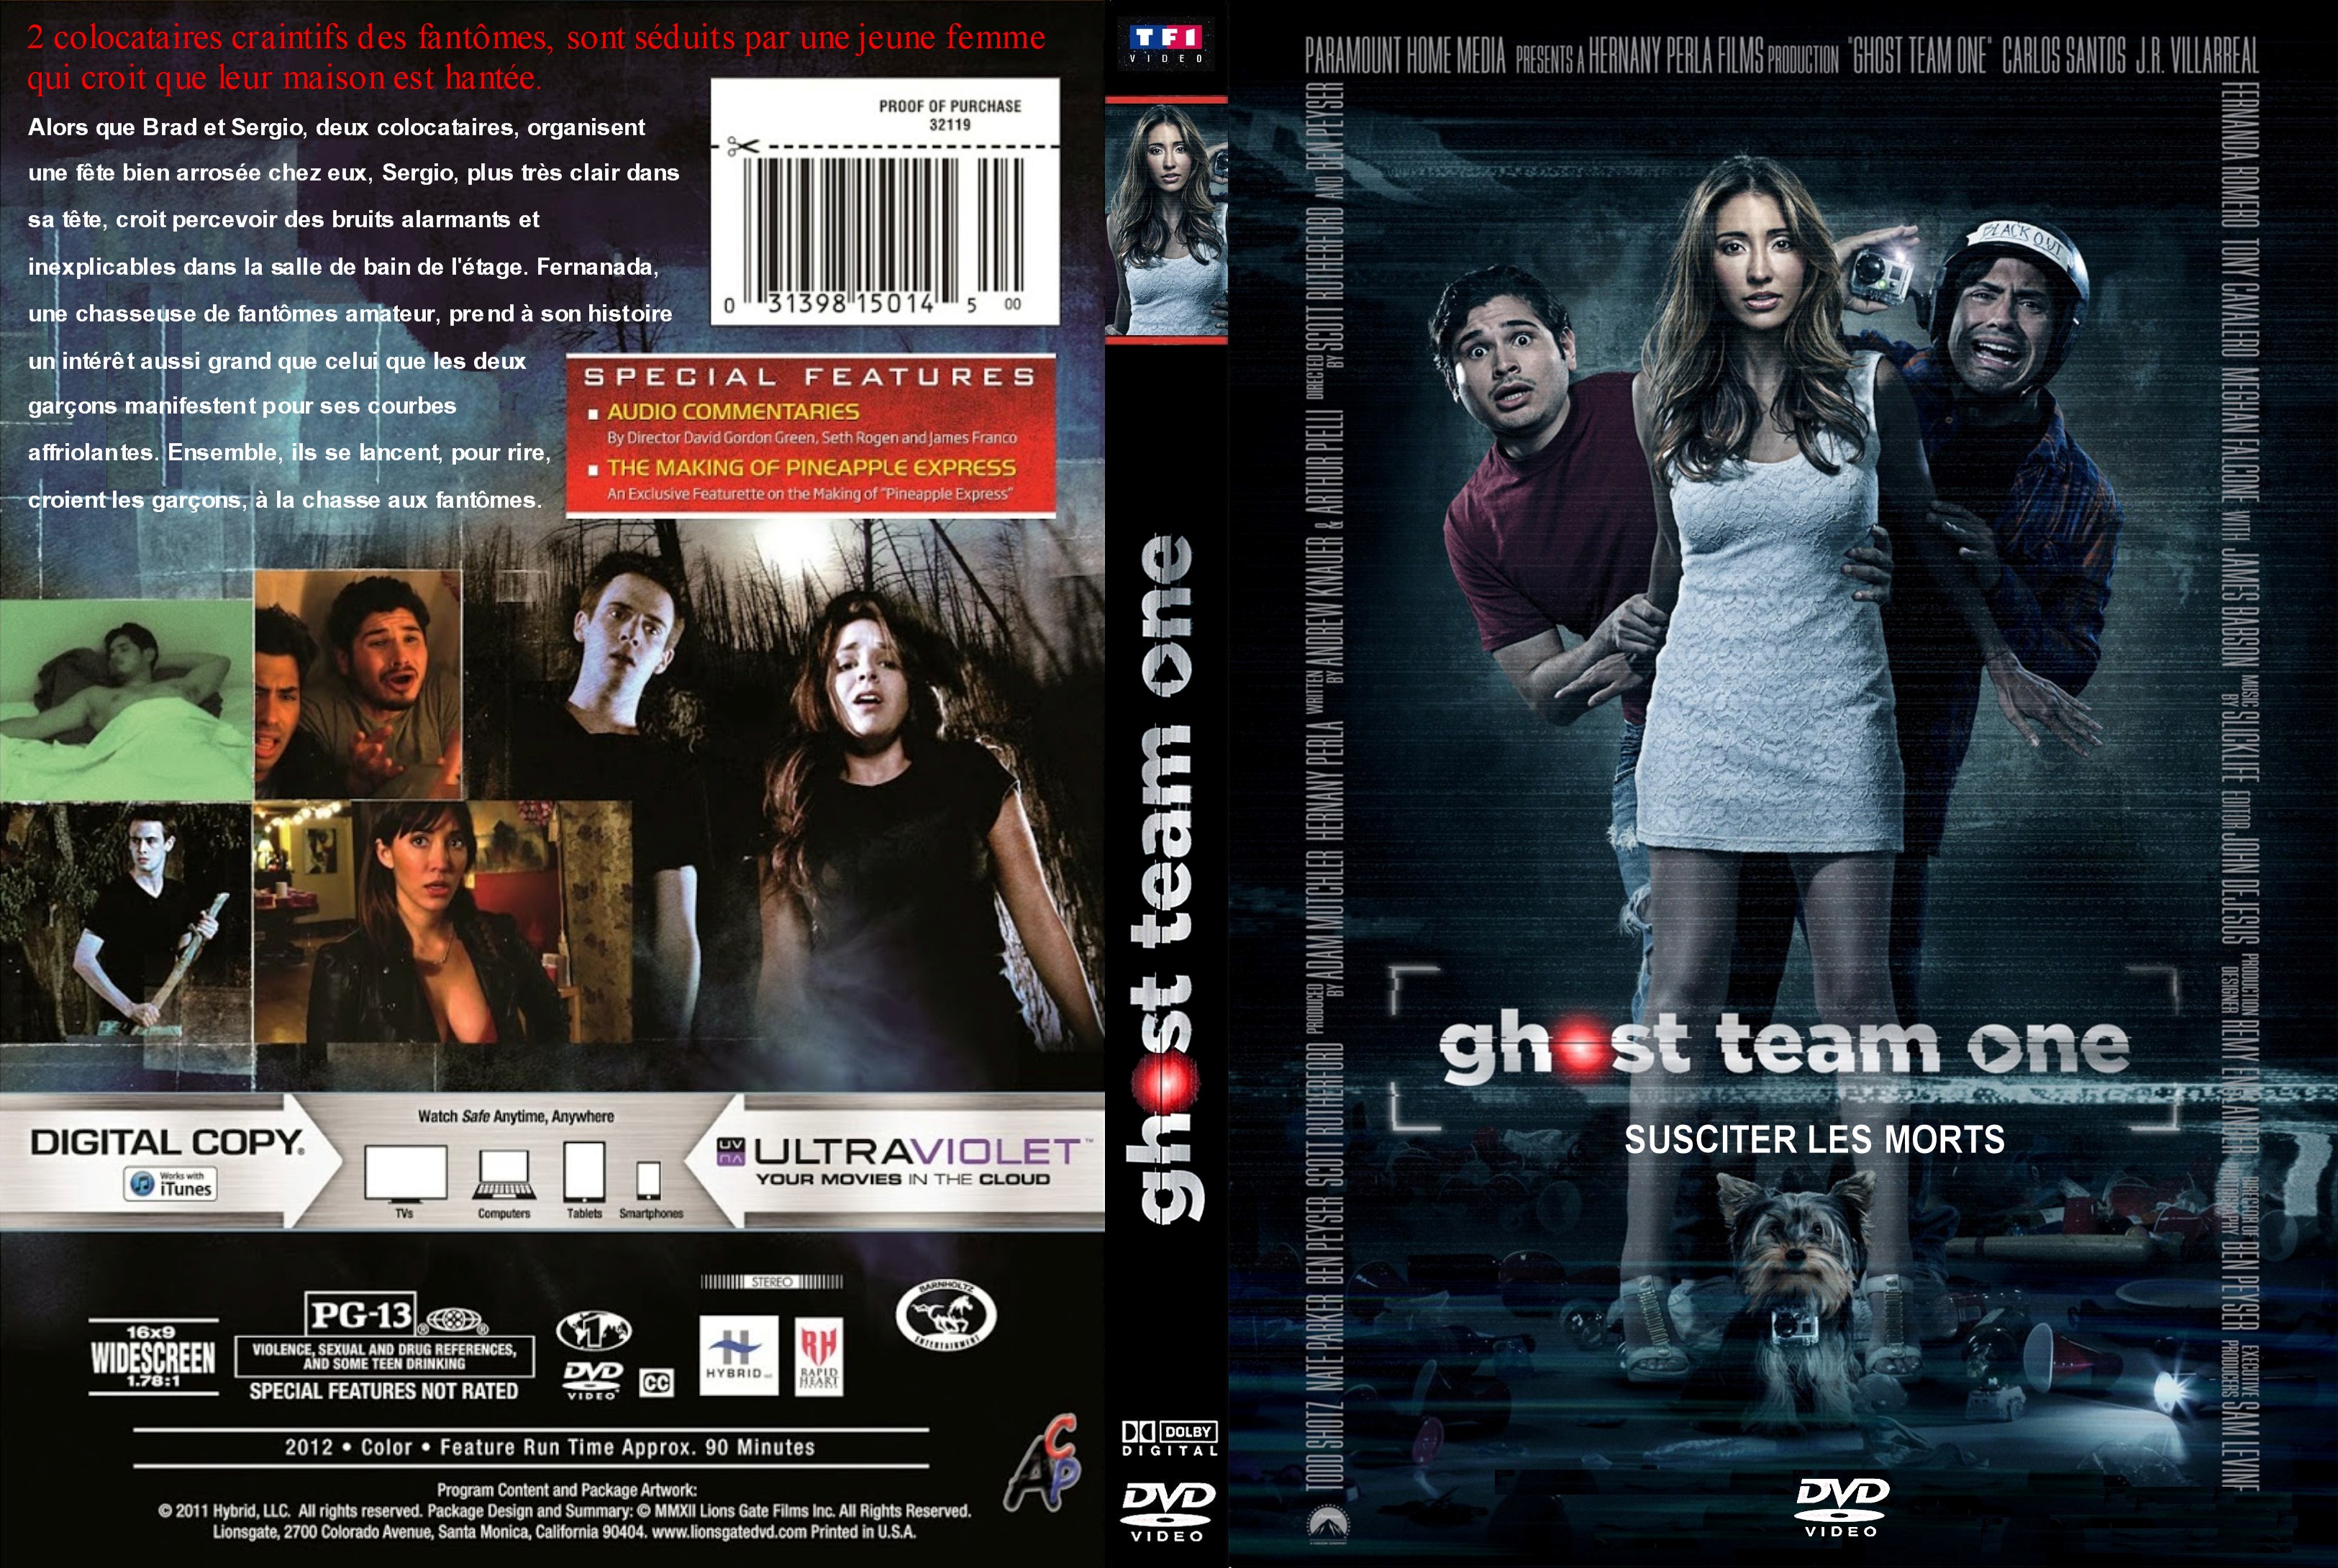 Jaquette DVD Ghost Team One custom